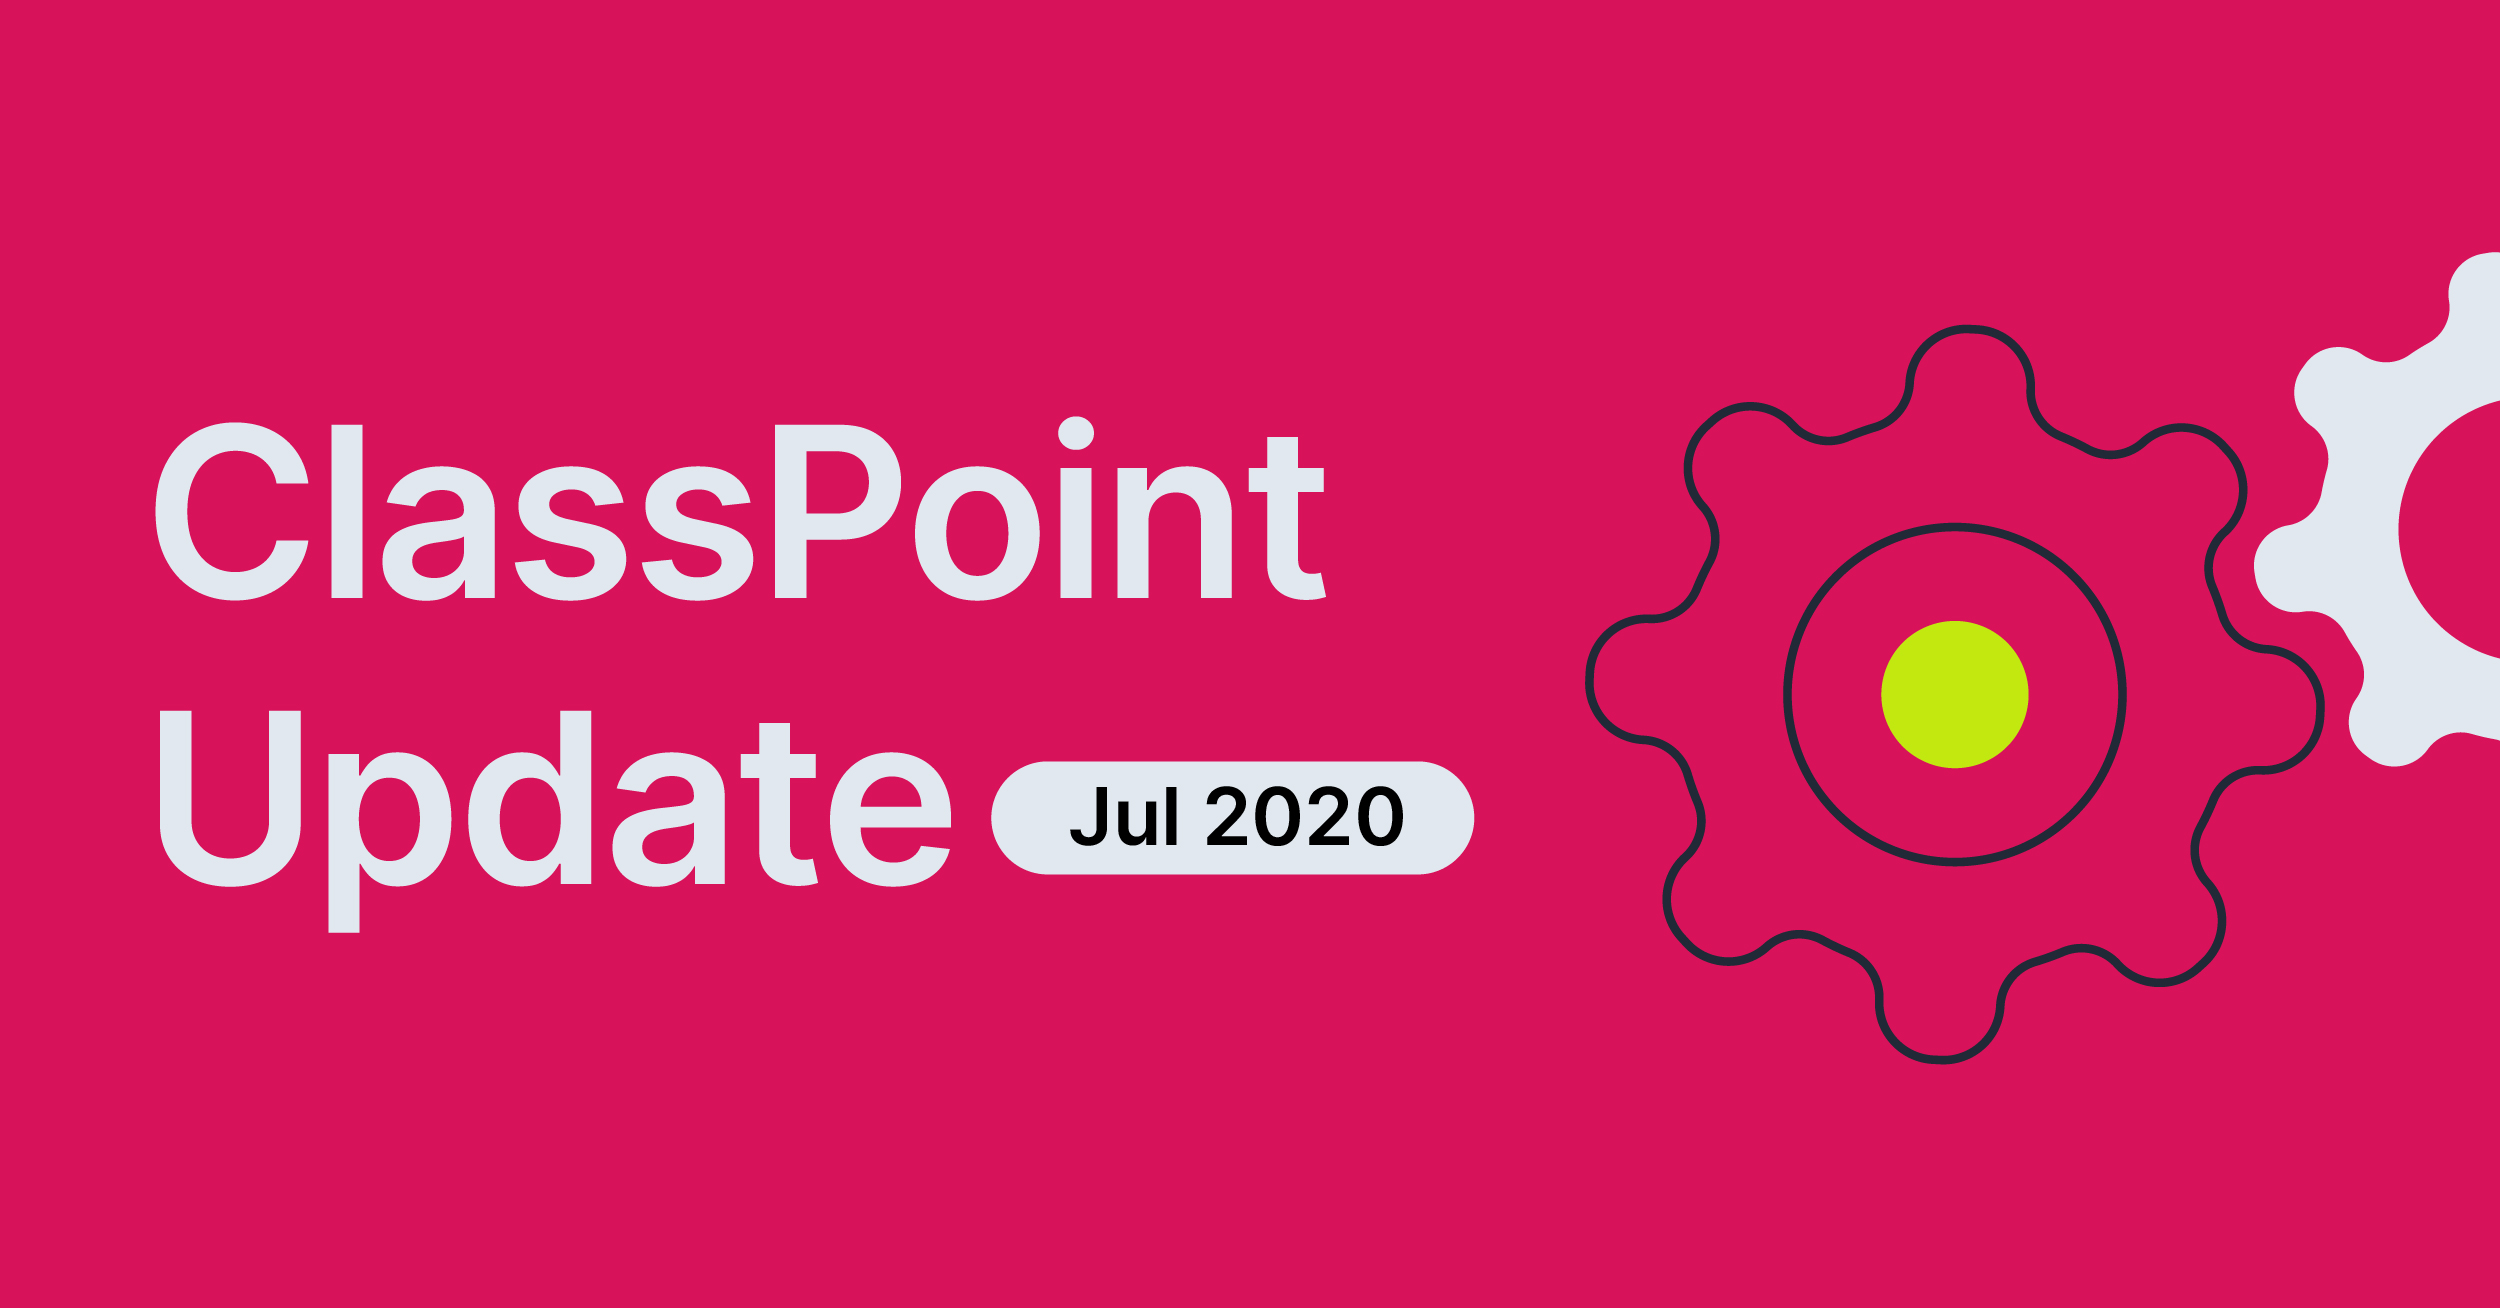 ClassPoint Update: July 2020 Release Note